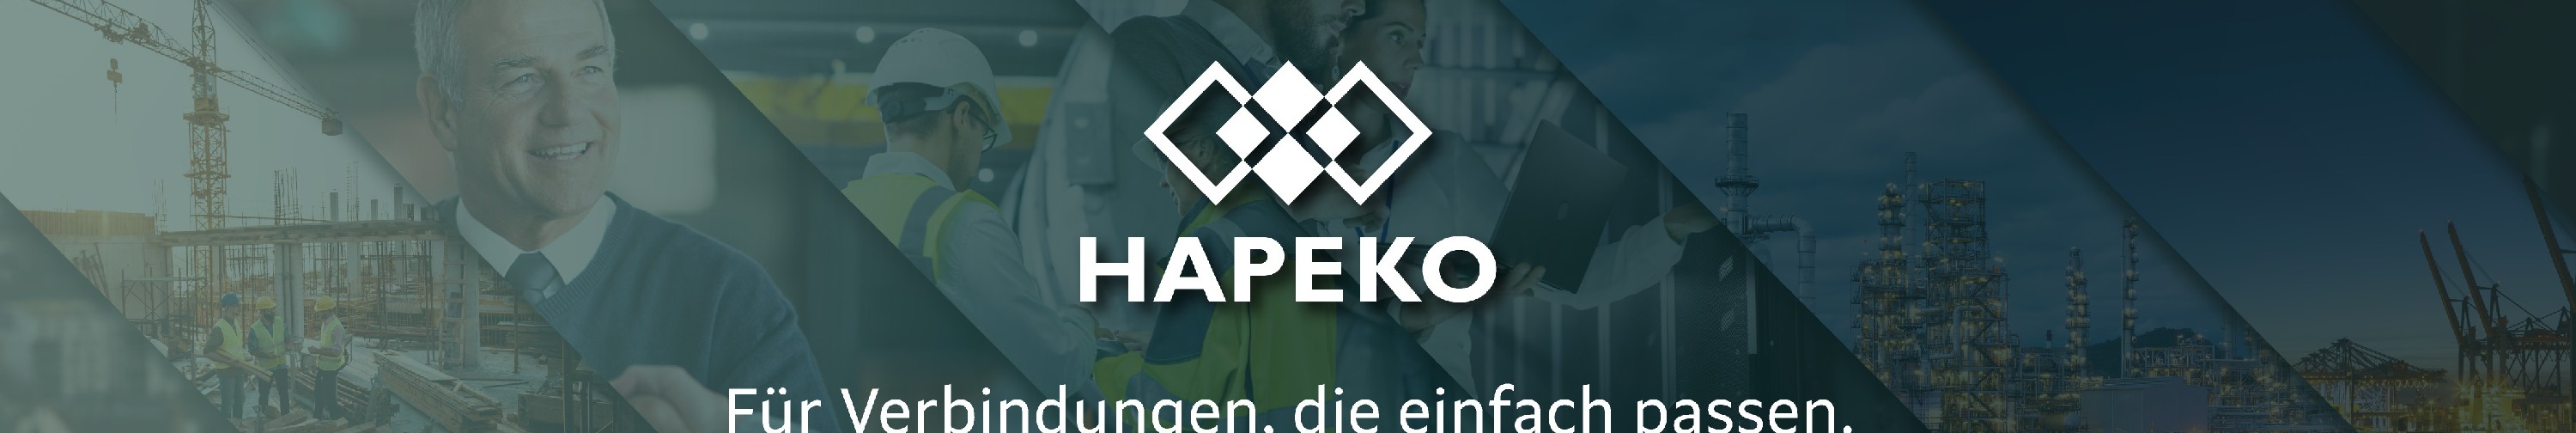 Hapeko background